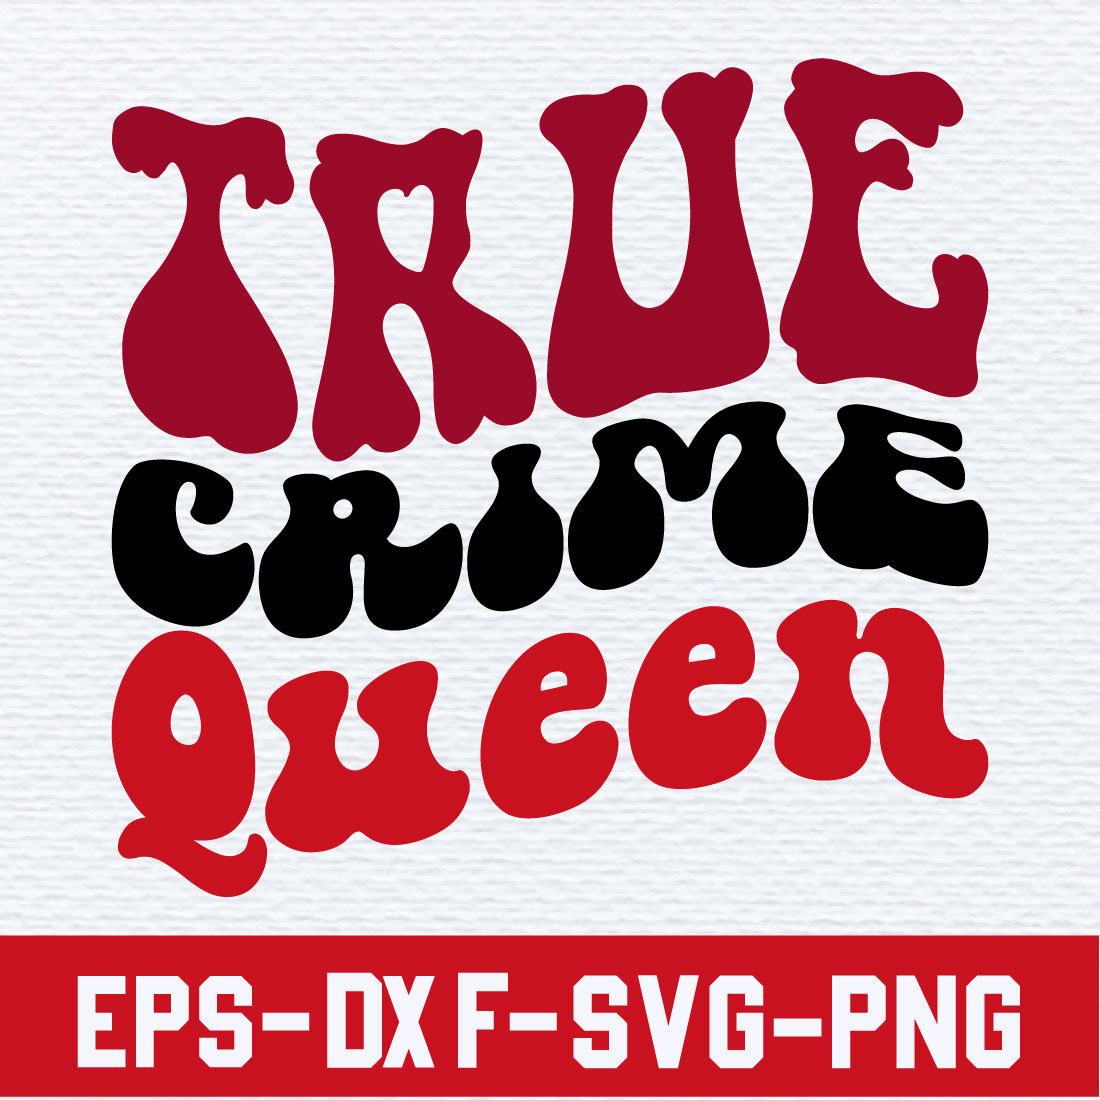 True Crime Queen preview image.